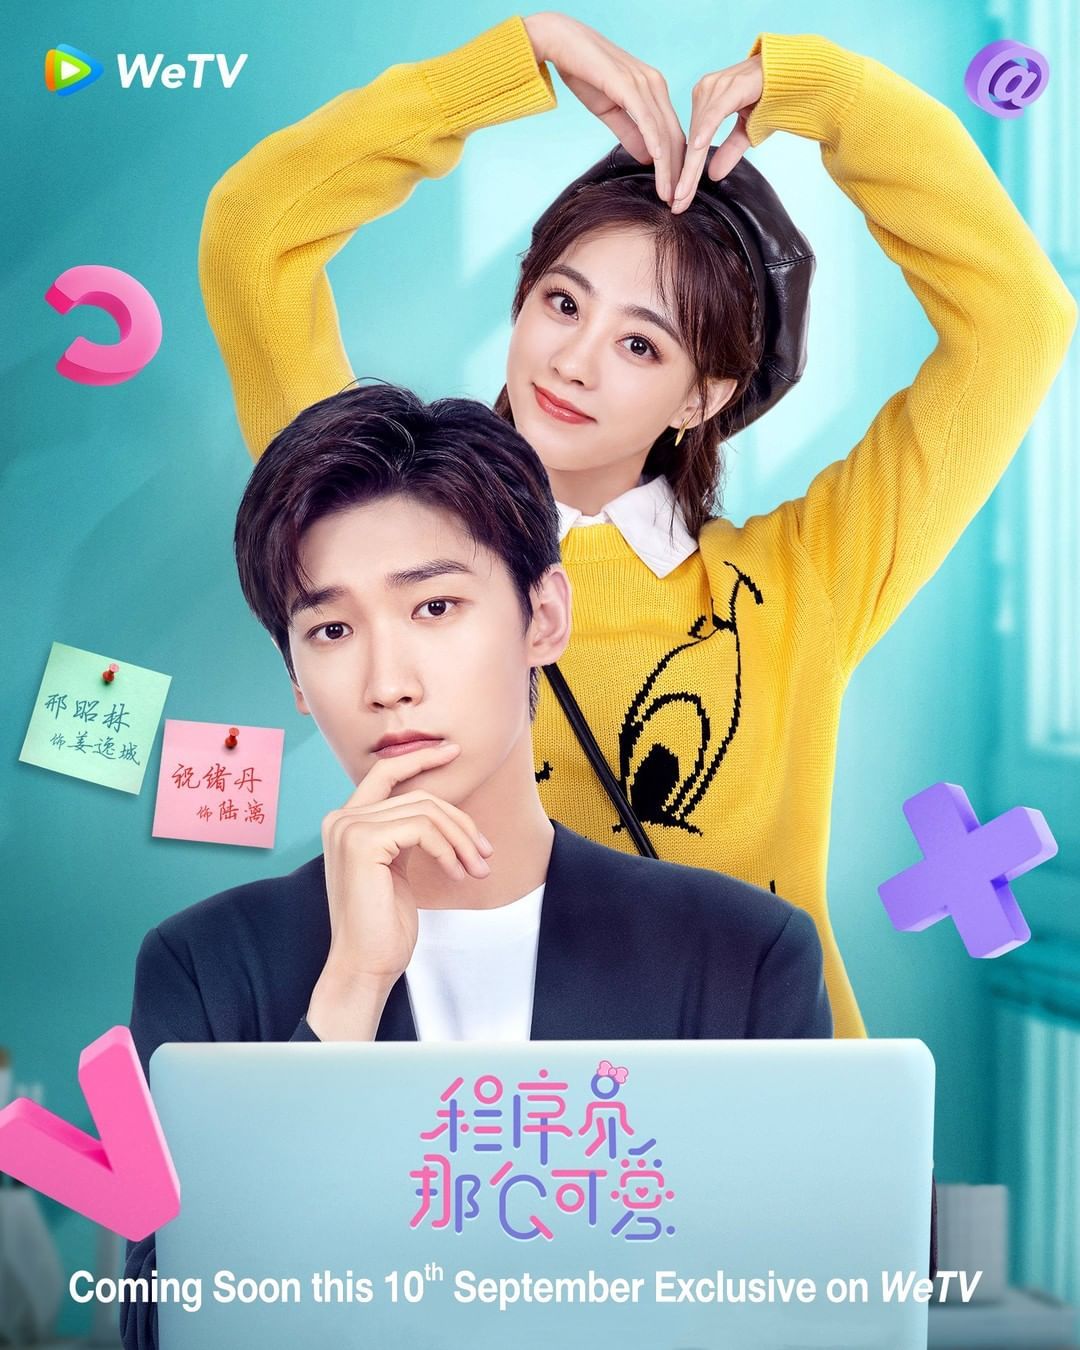 Link nonton Drama China 'Cute Programmer' Episode 1-12 Sub Indo, Drama